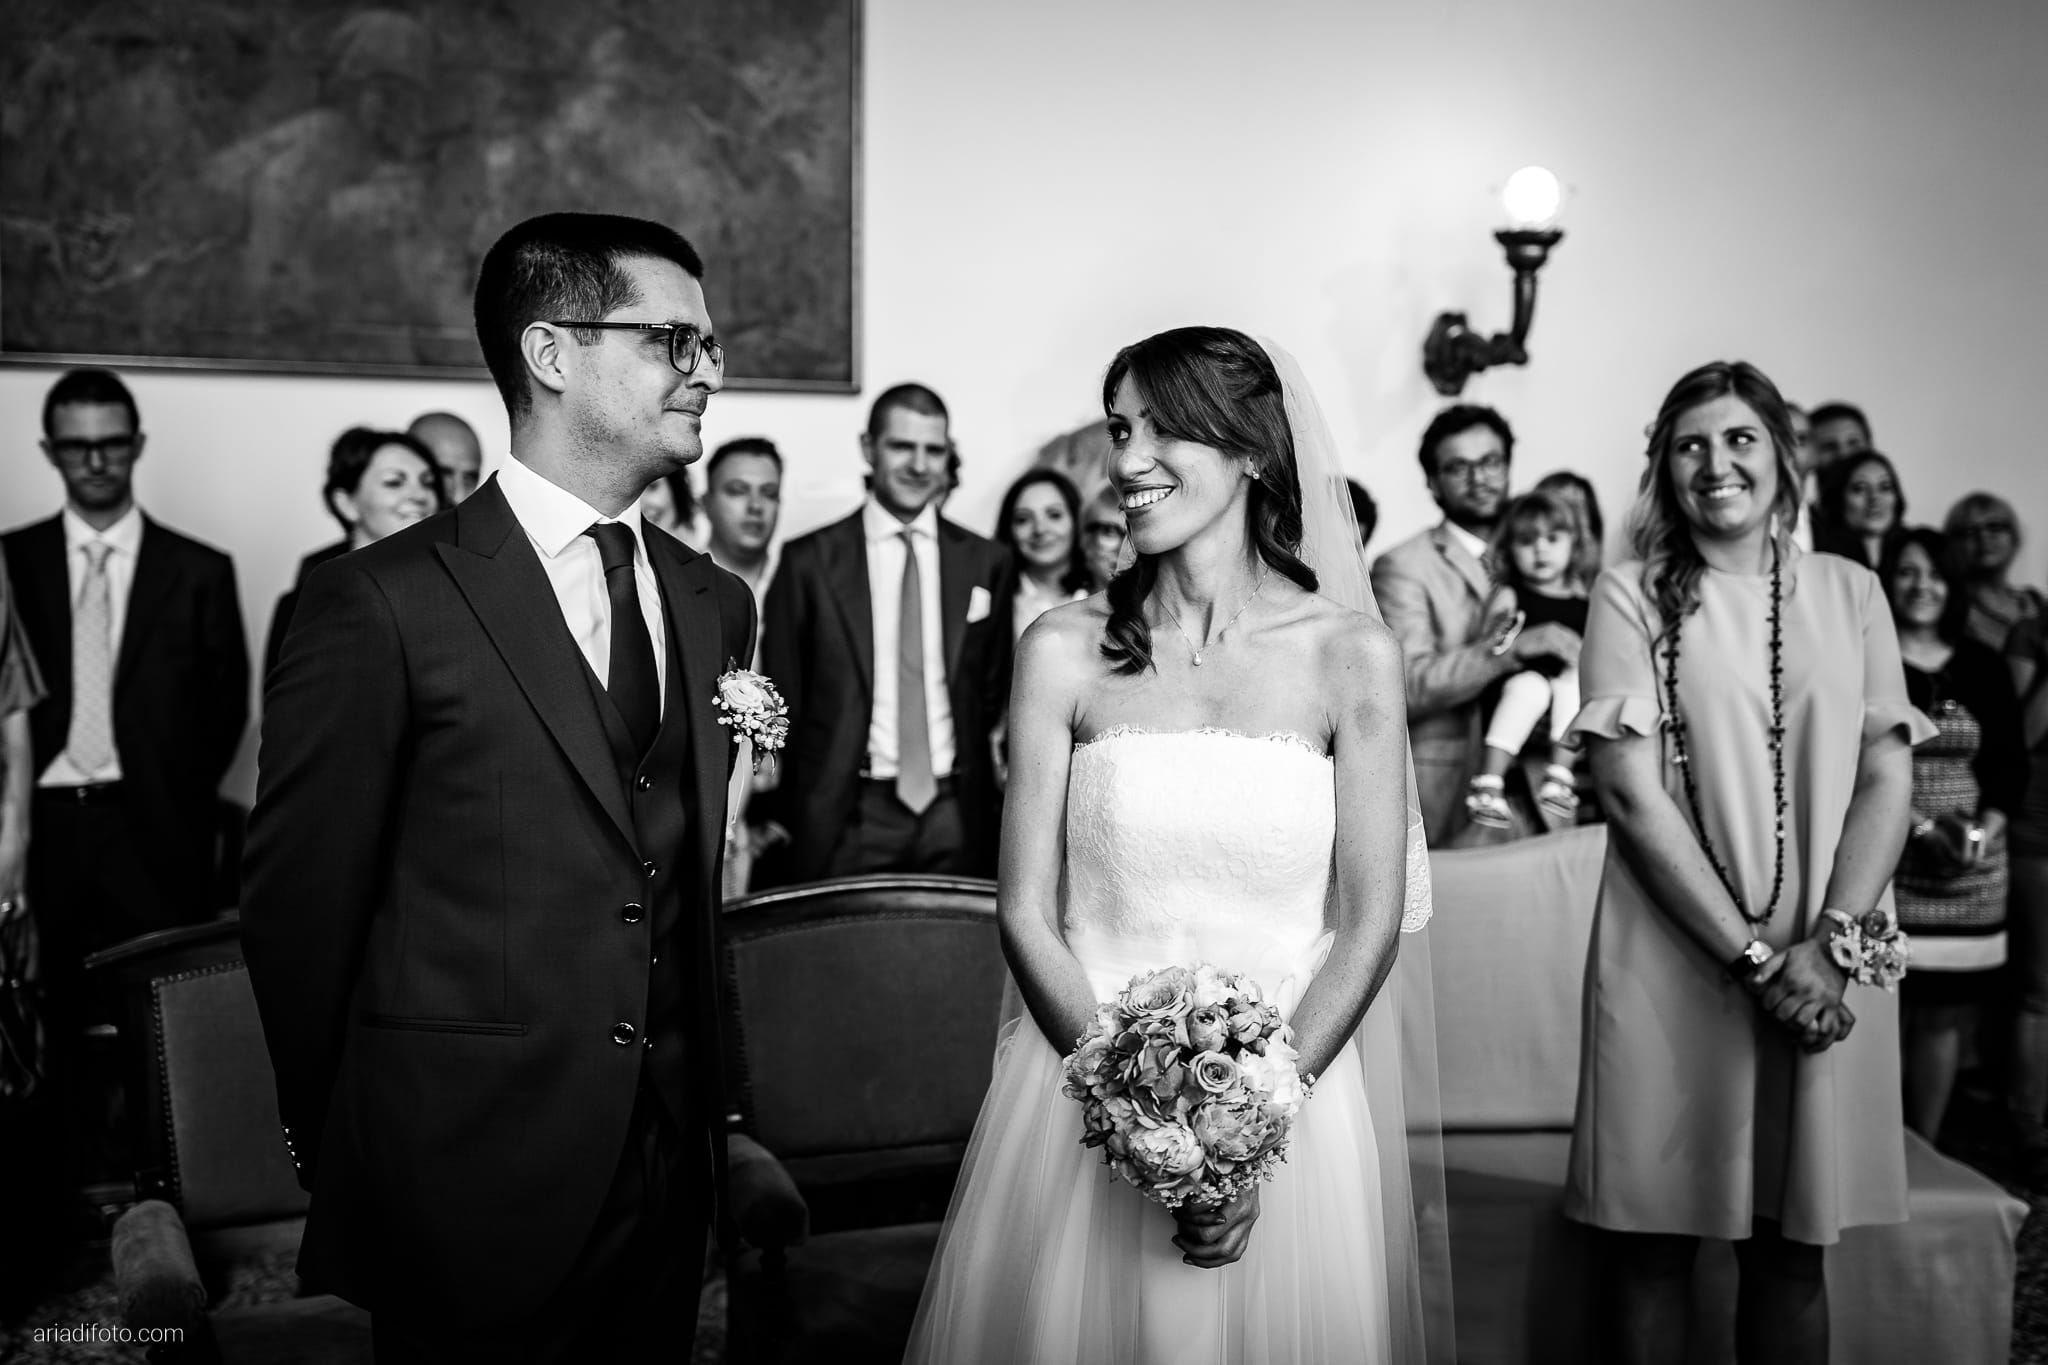 Marina Stefano Matrimonio Castello San Giusto Molo IV Trieste cerimonia civile